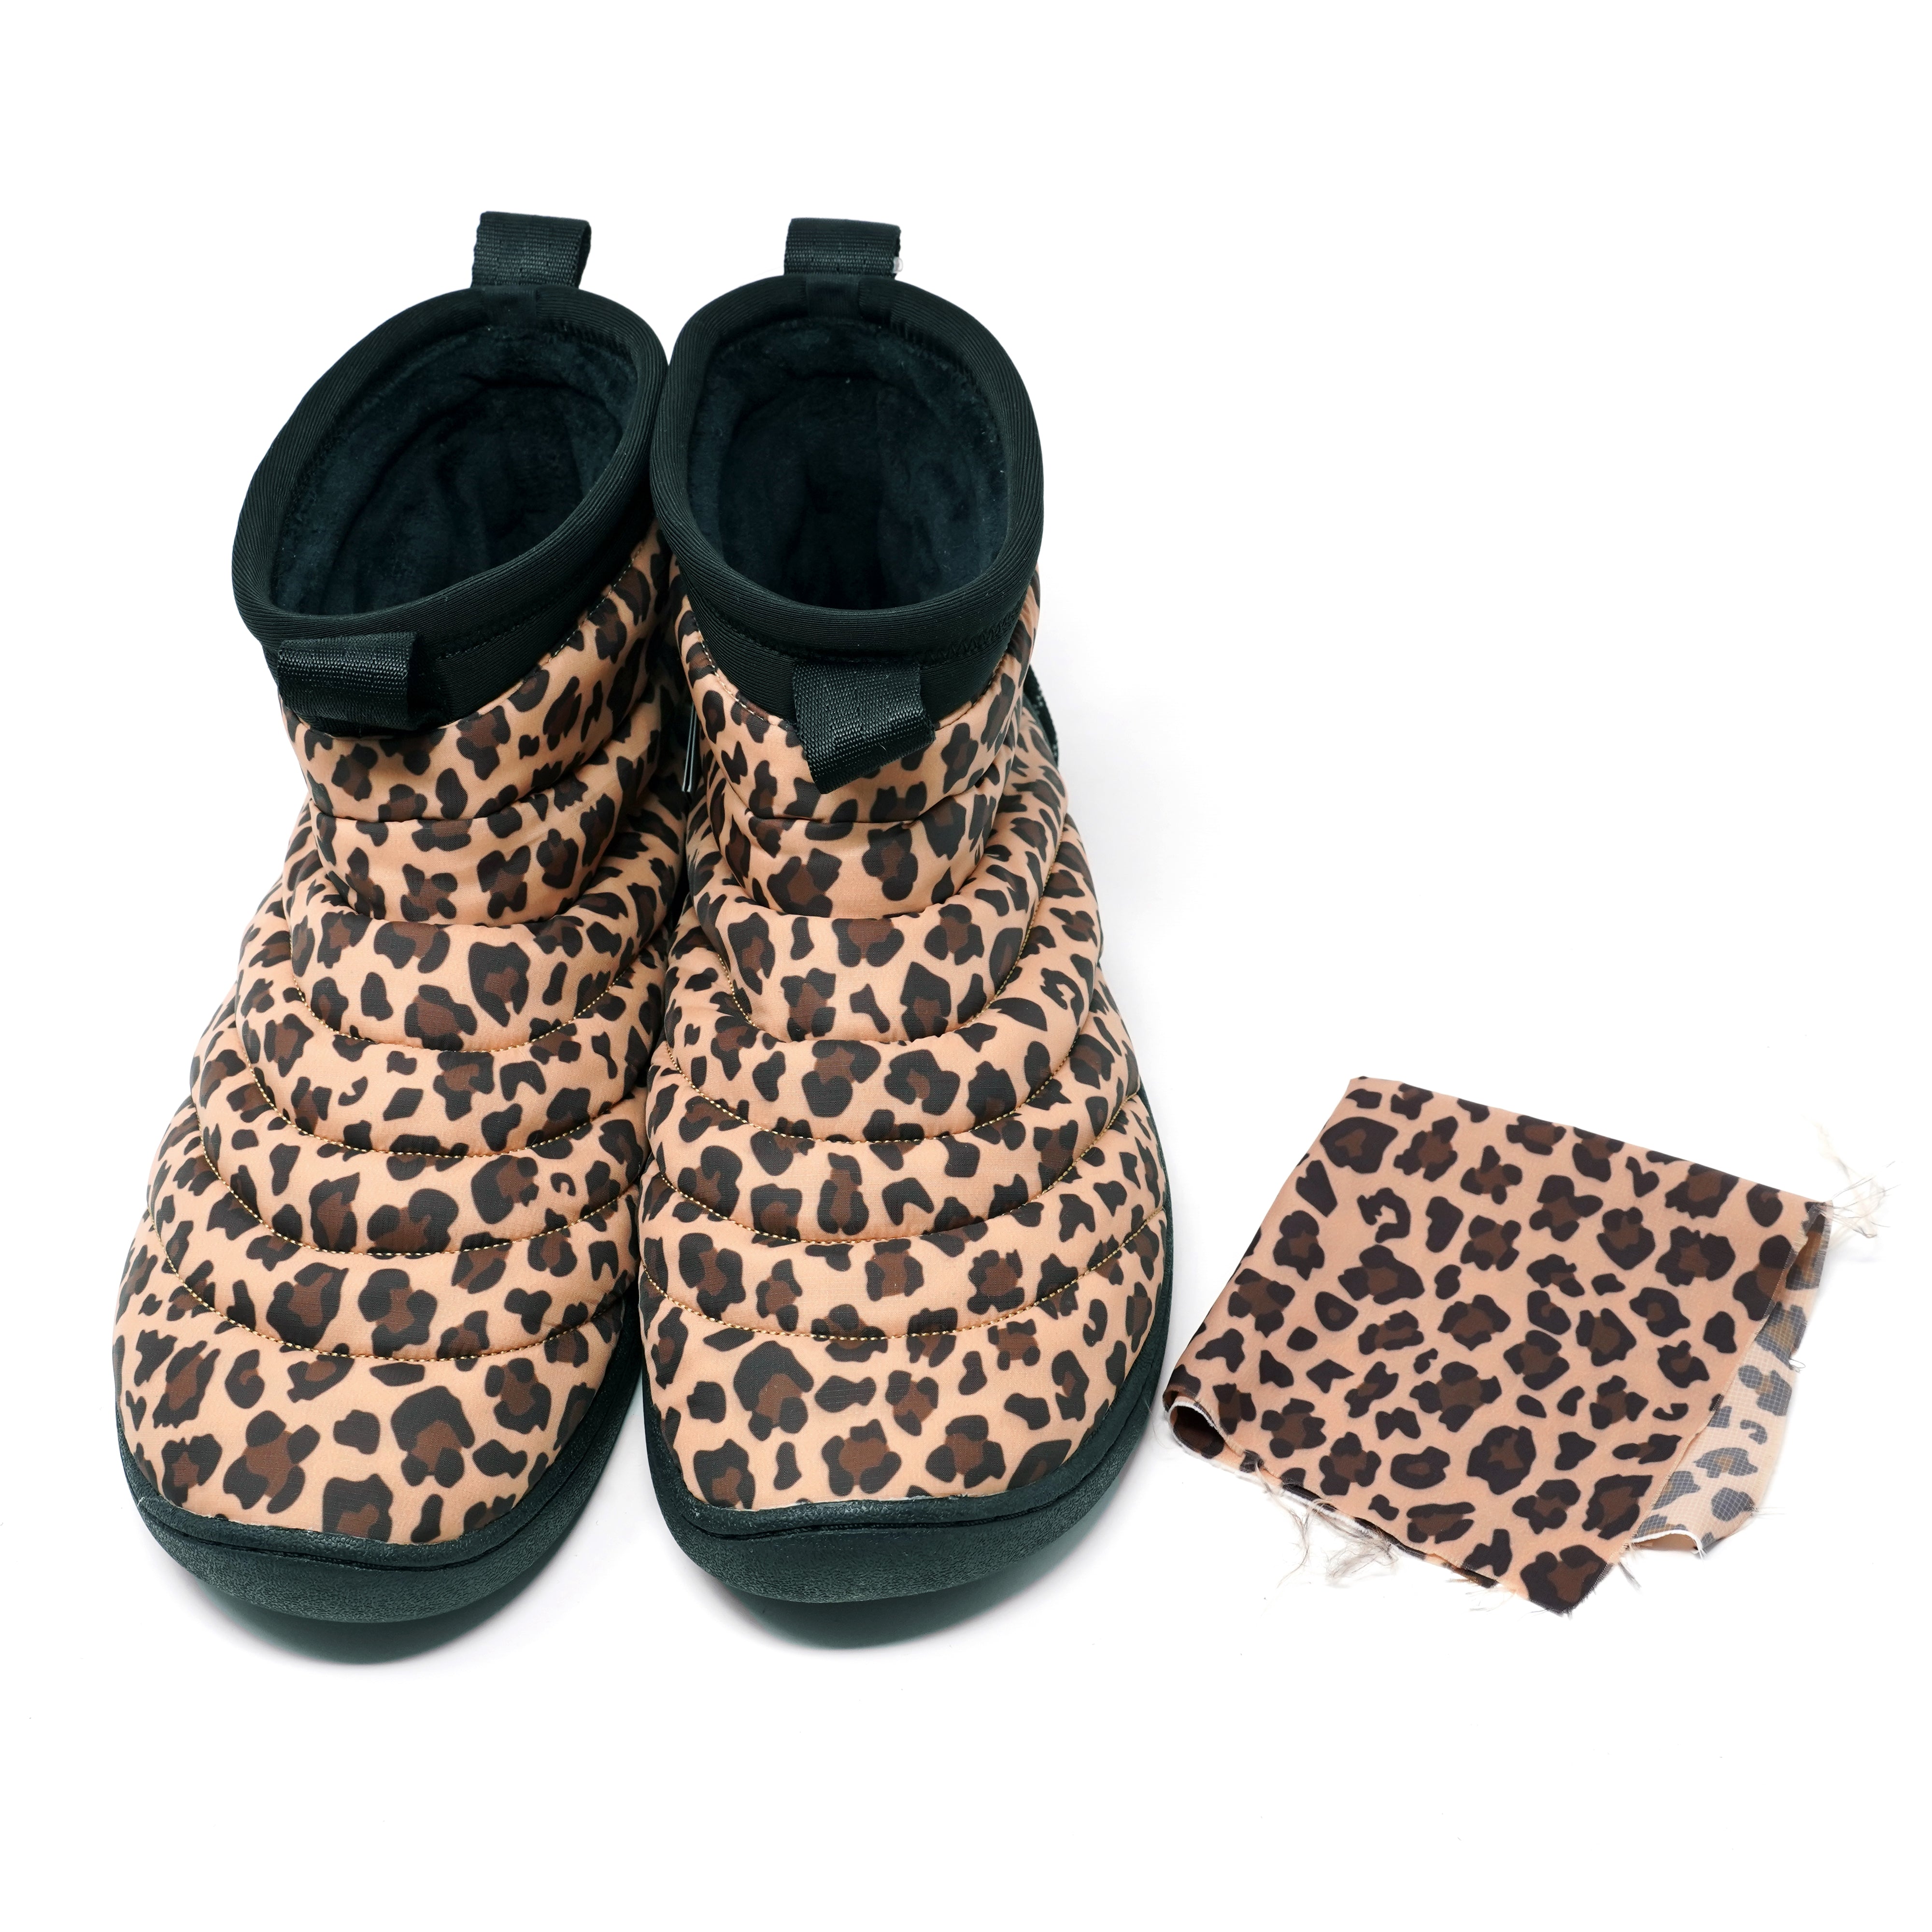 NO:433168 | Name:SCHLAF BOOTIE | Color:Leopard | Style:【SHAKA】-SHAKA-ADDICTION FUKUOKA